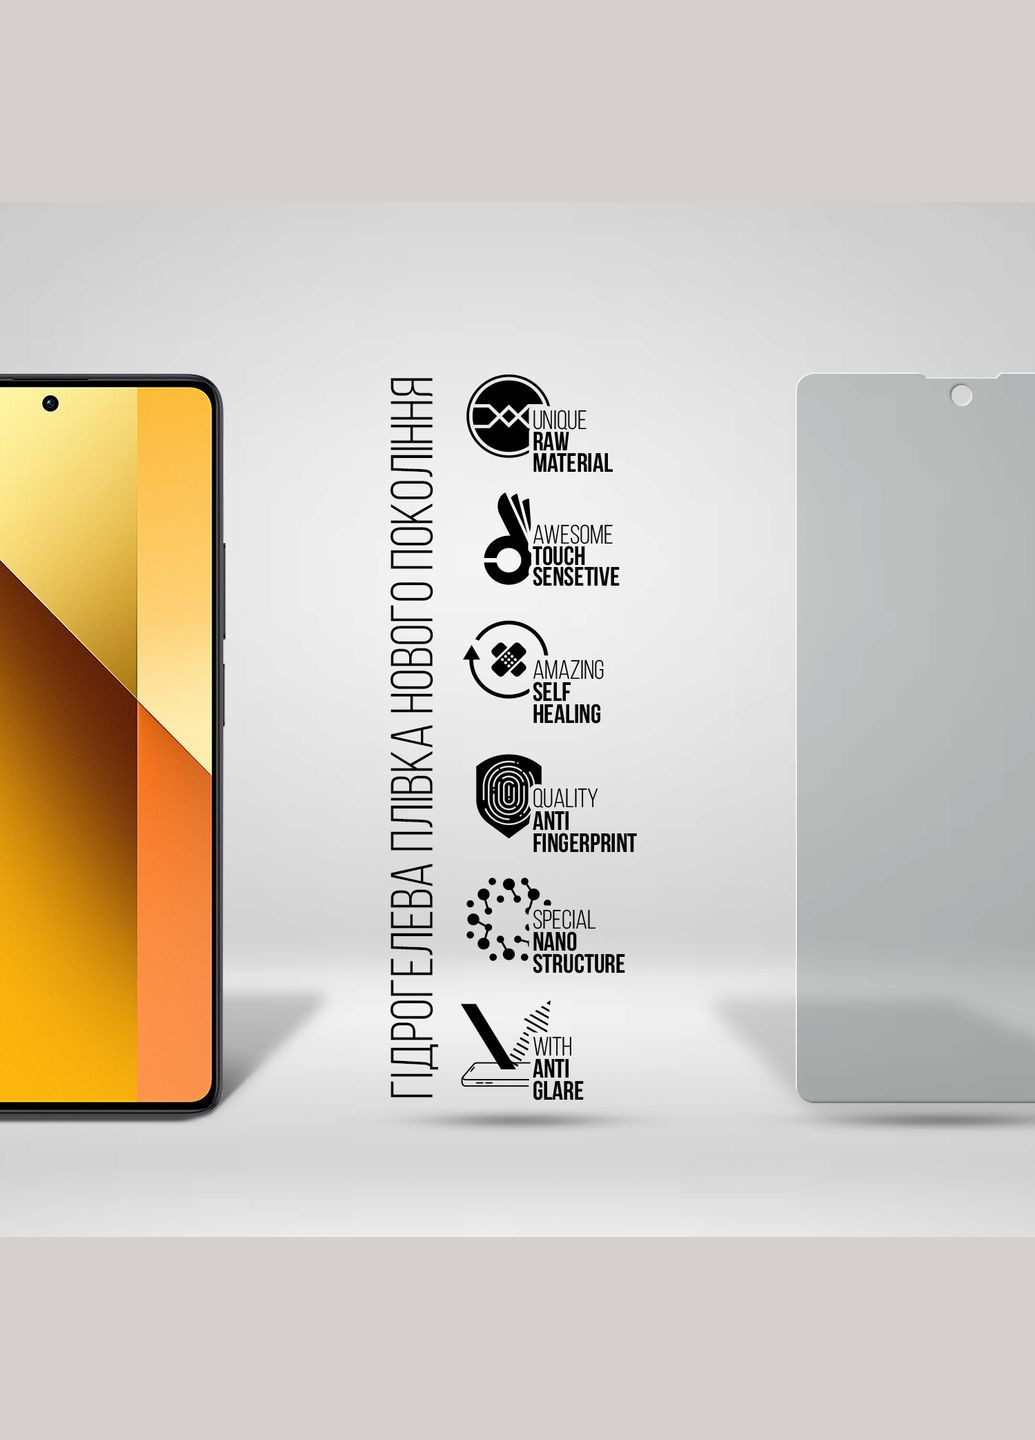 Гидрогелевая пленка Matte для Xiaomi Redmi Note 13 5G (ARM71871) ArmorStandart (280438947)